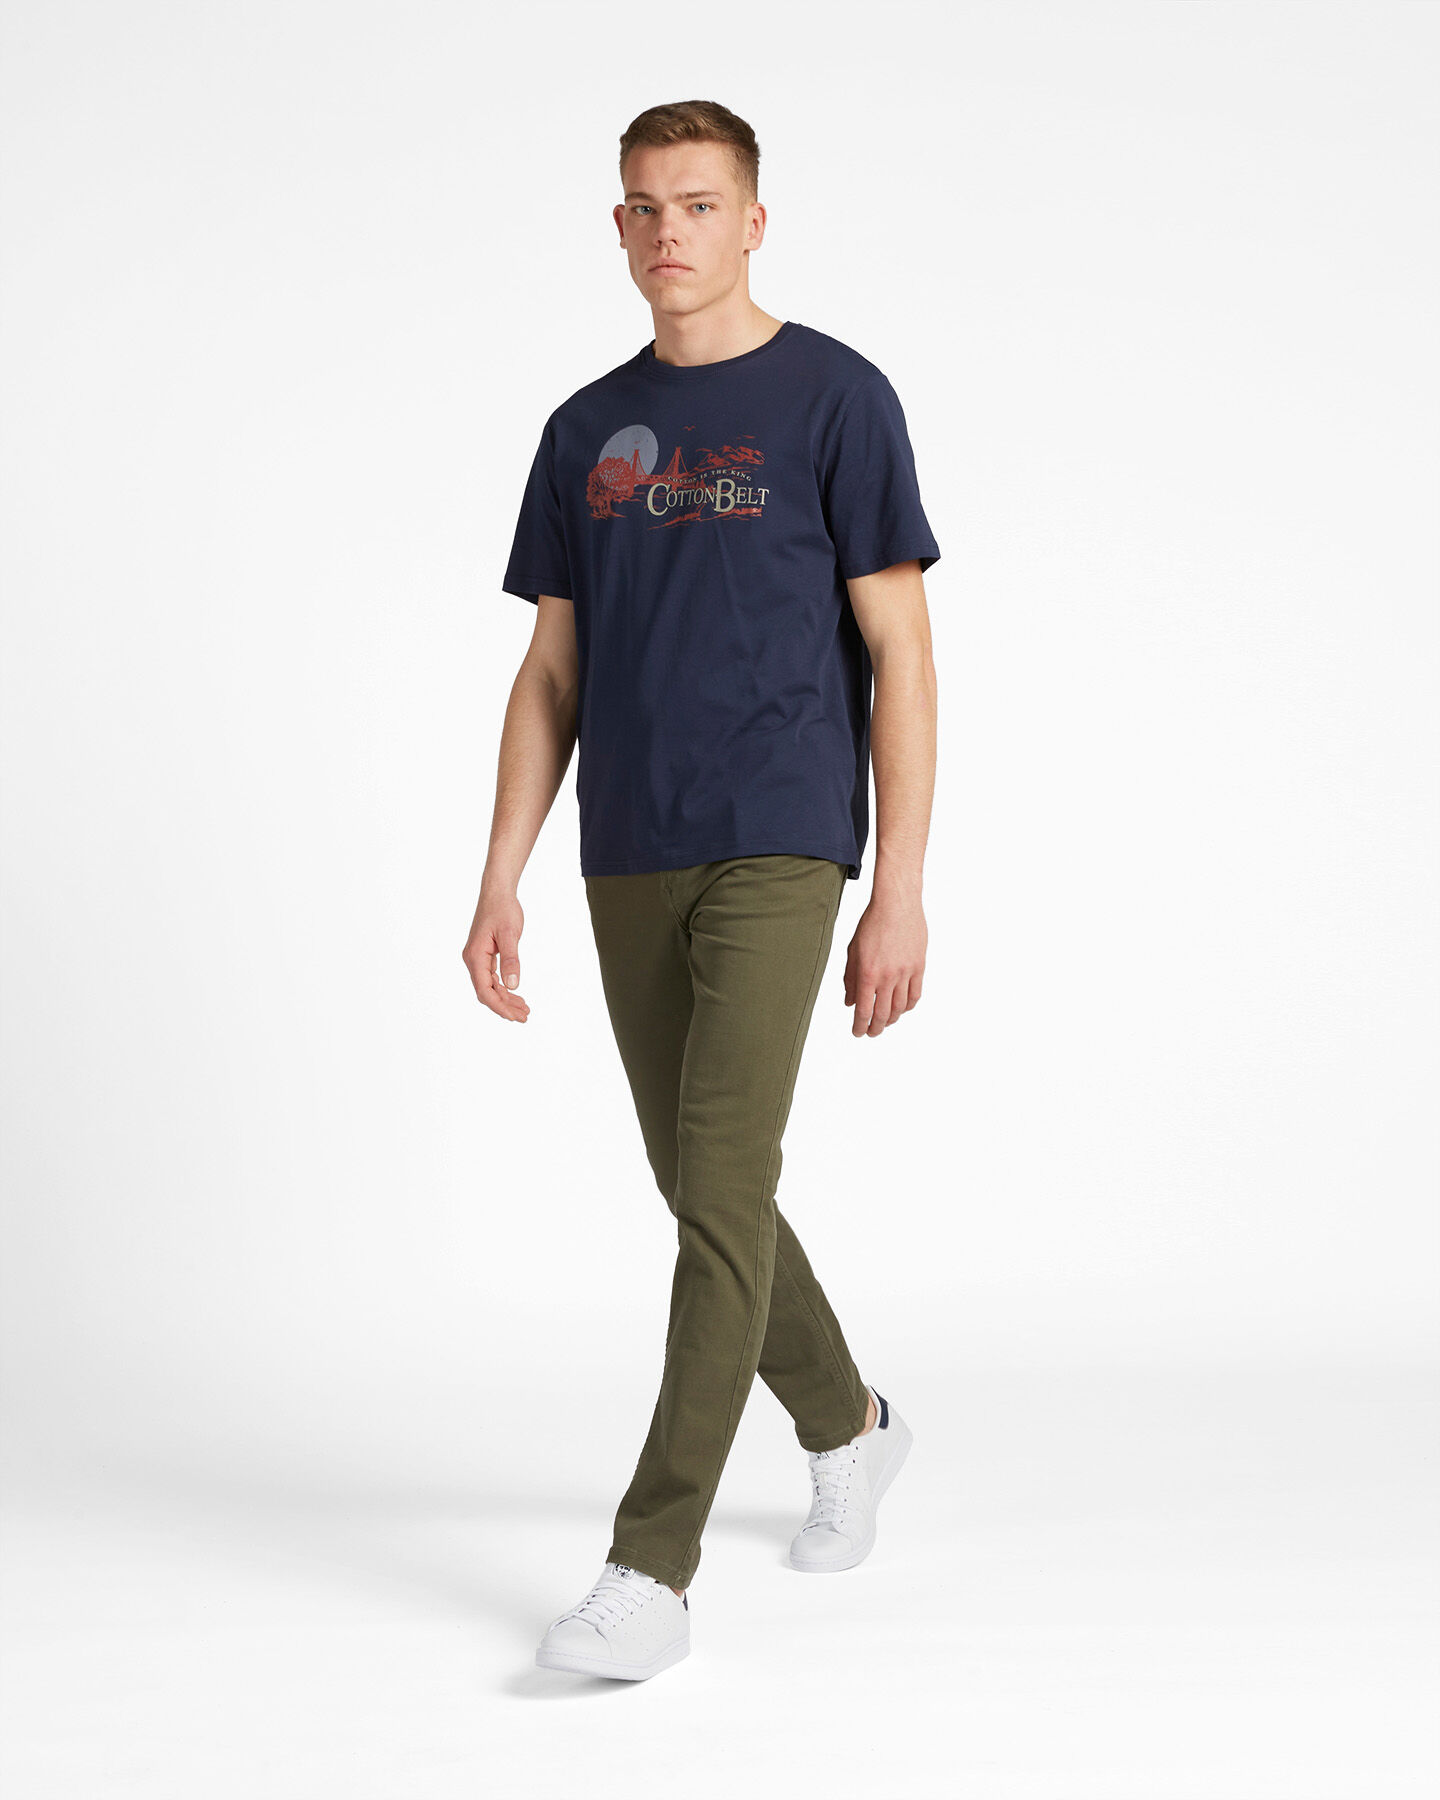  T-Shirt COTTON BELT BIG LOGO PRINTED M S4103173|935|S scatto 3